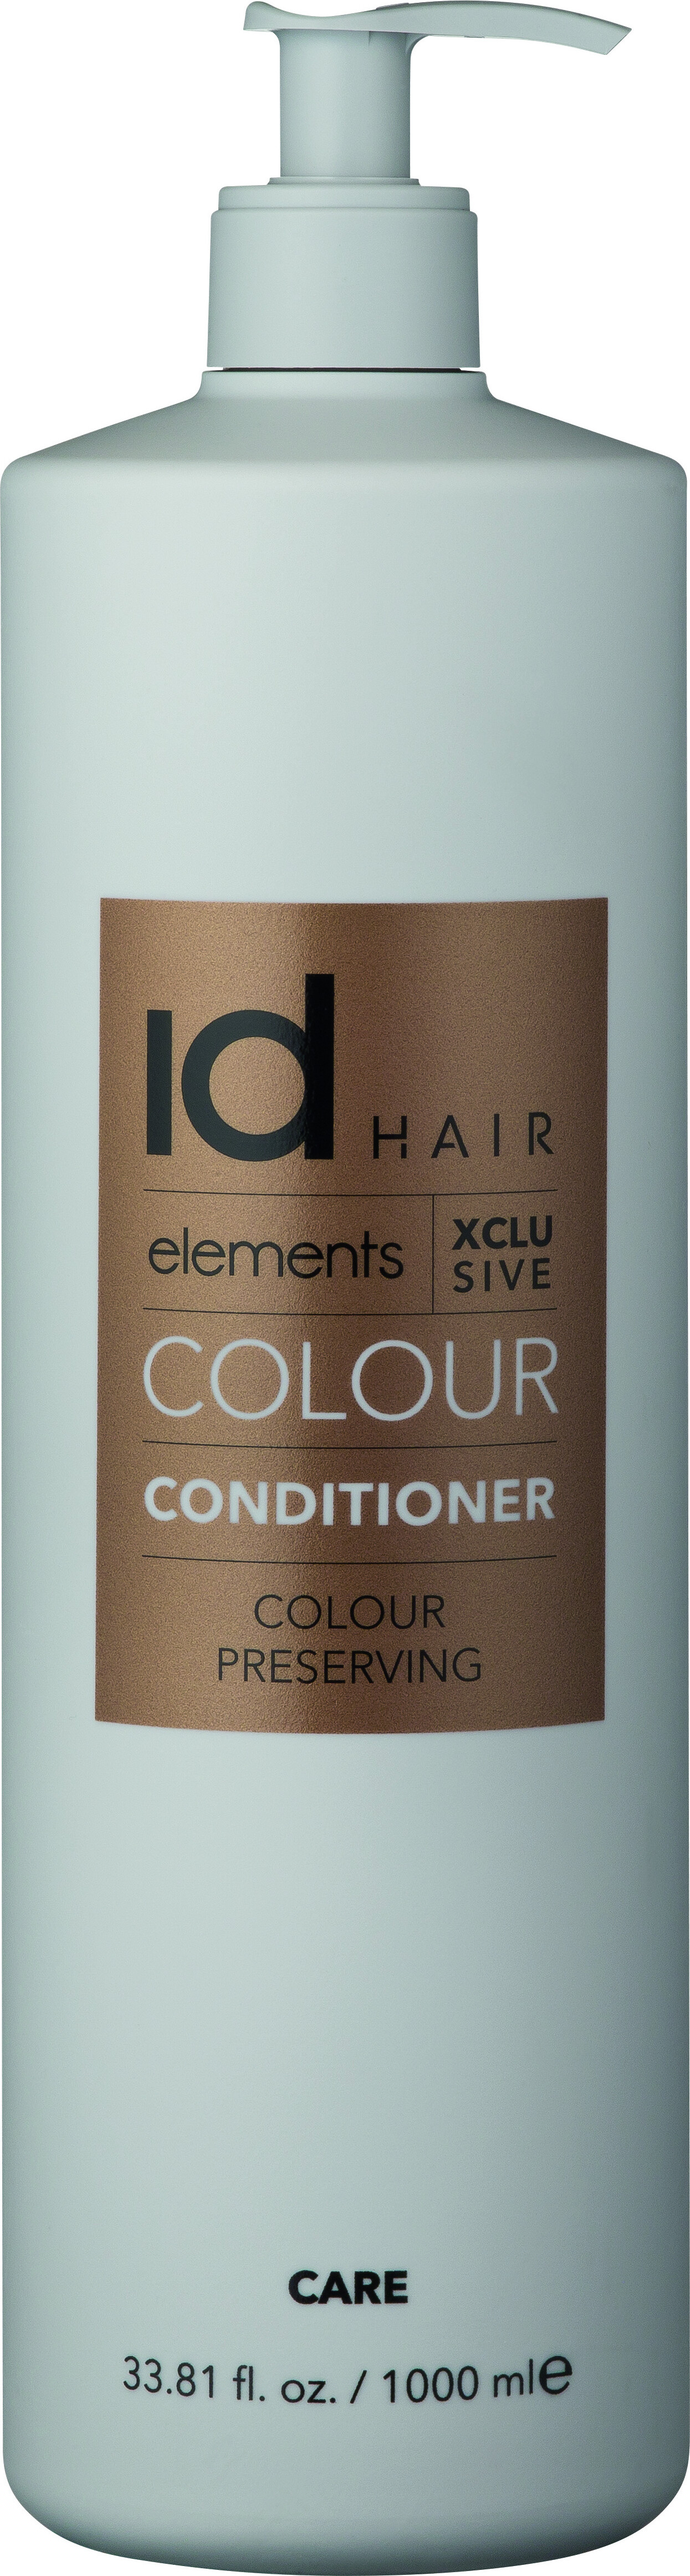 Billede af Id Hair - Elements Xclusive Colour Conditioner 1000 Ml hos Gucca.dk